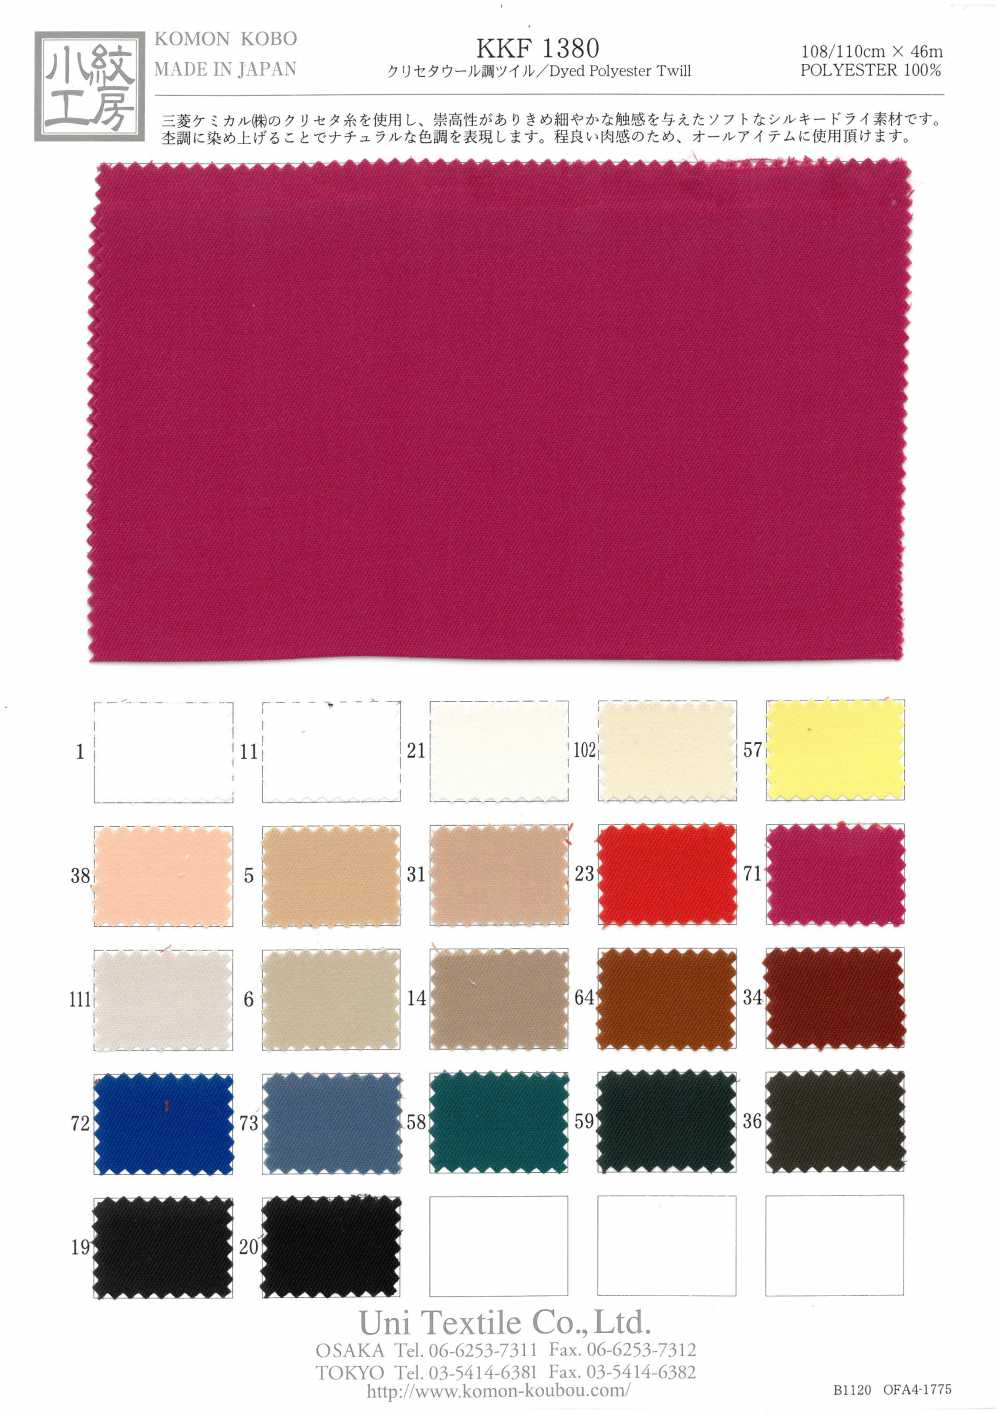 KKF1380 Chryseta Wool Twill[Textile / Fabric] Uni Textile